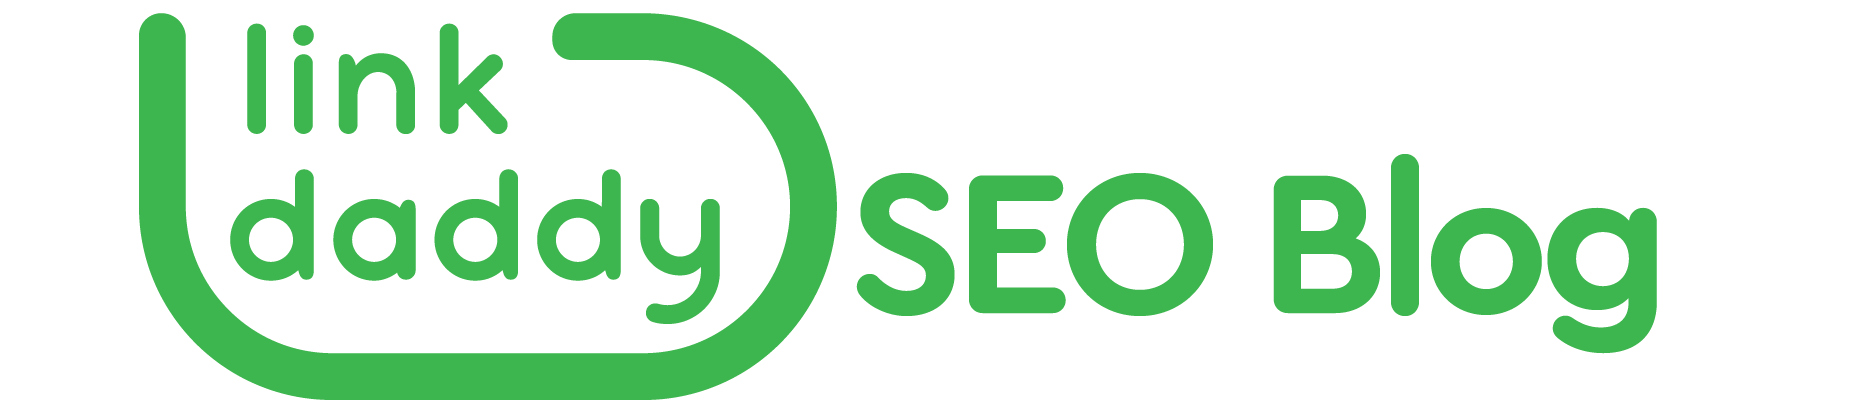 https://storage.googleapis.com/cloudsites/seo-services/8678yb60c/img/cropped-linkdaddy-seoblog-logo.png